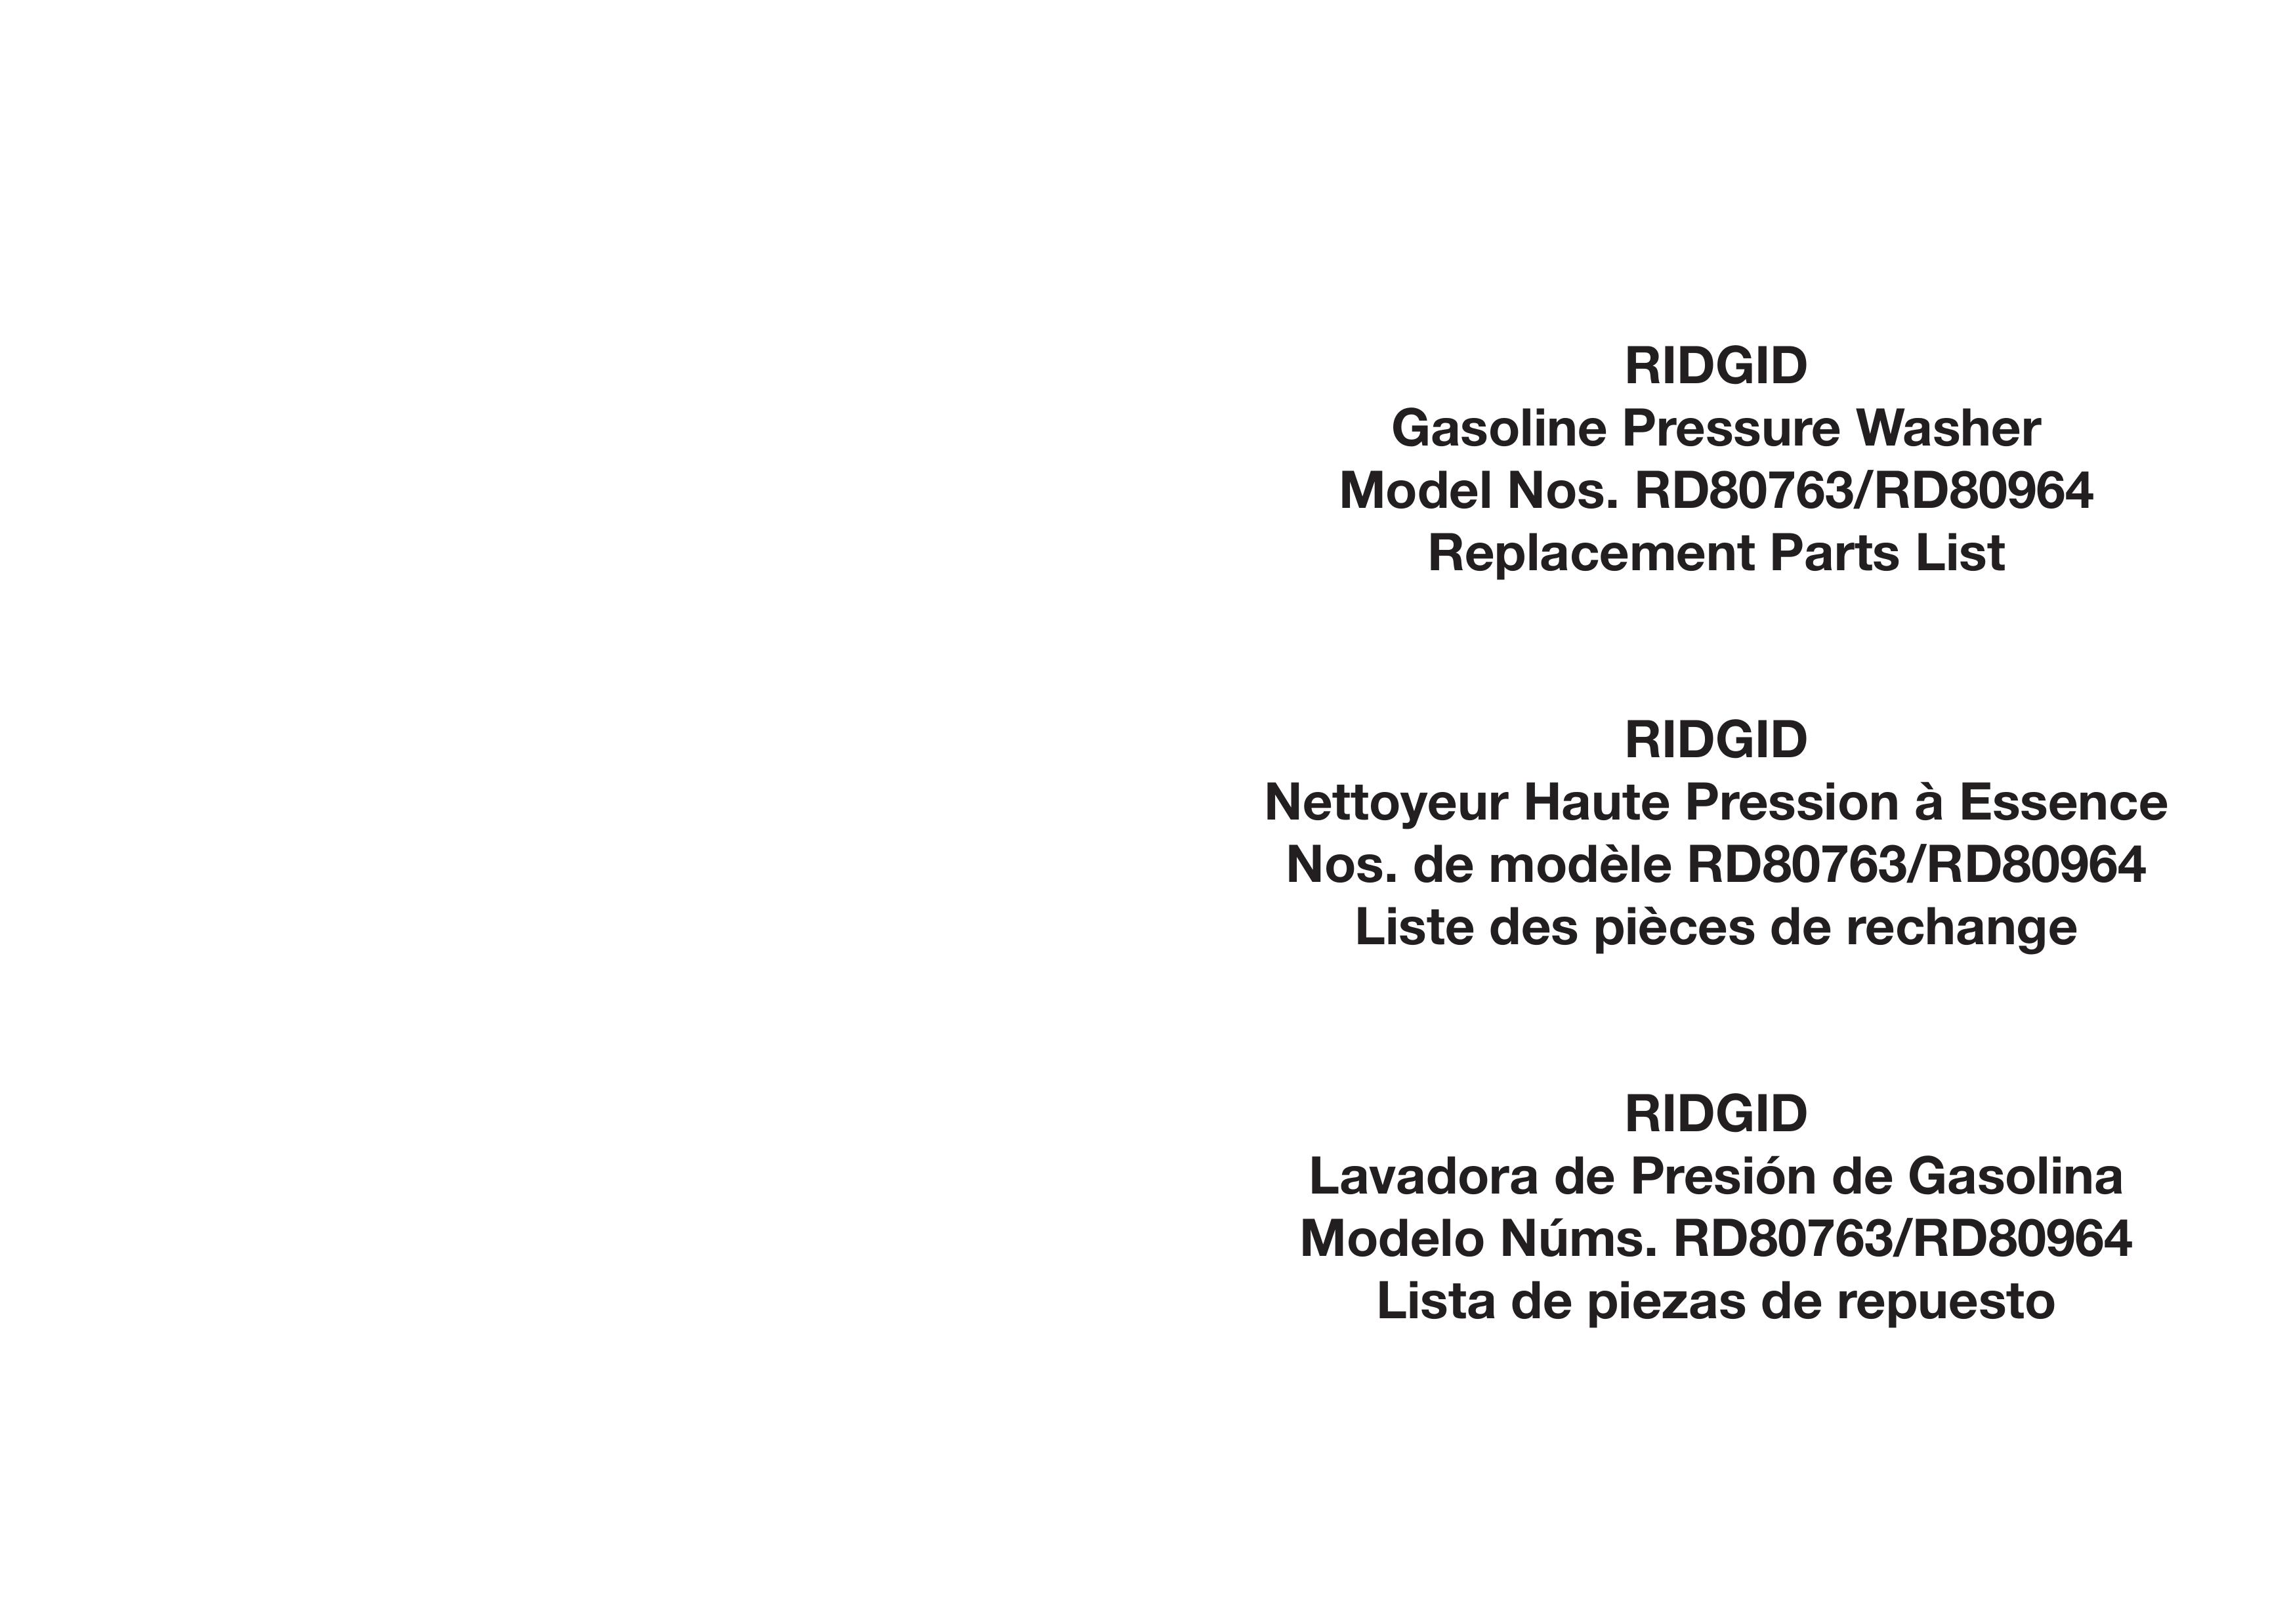 RIDGID RD80964 Pressure Washer User Manual